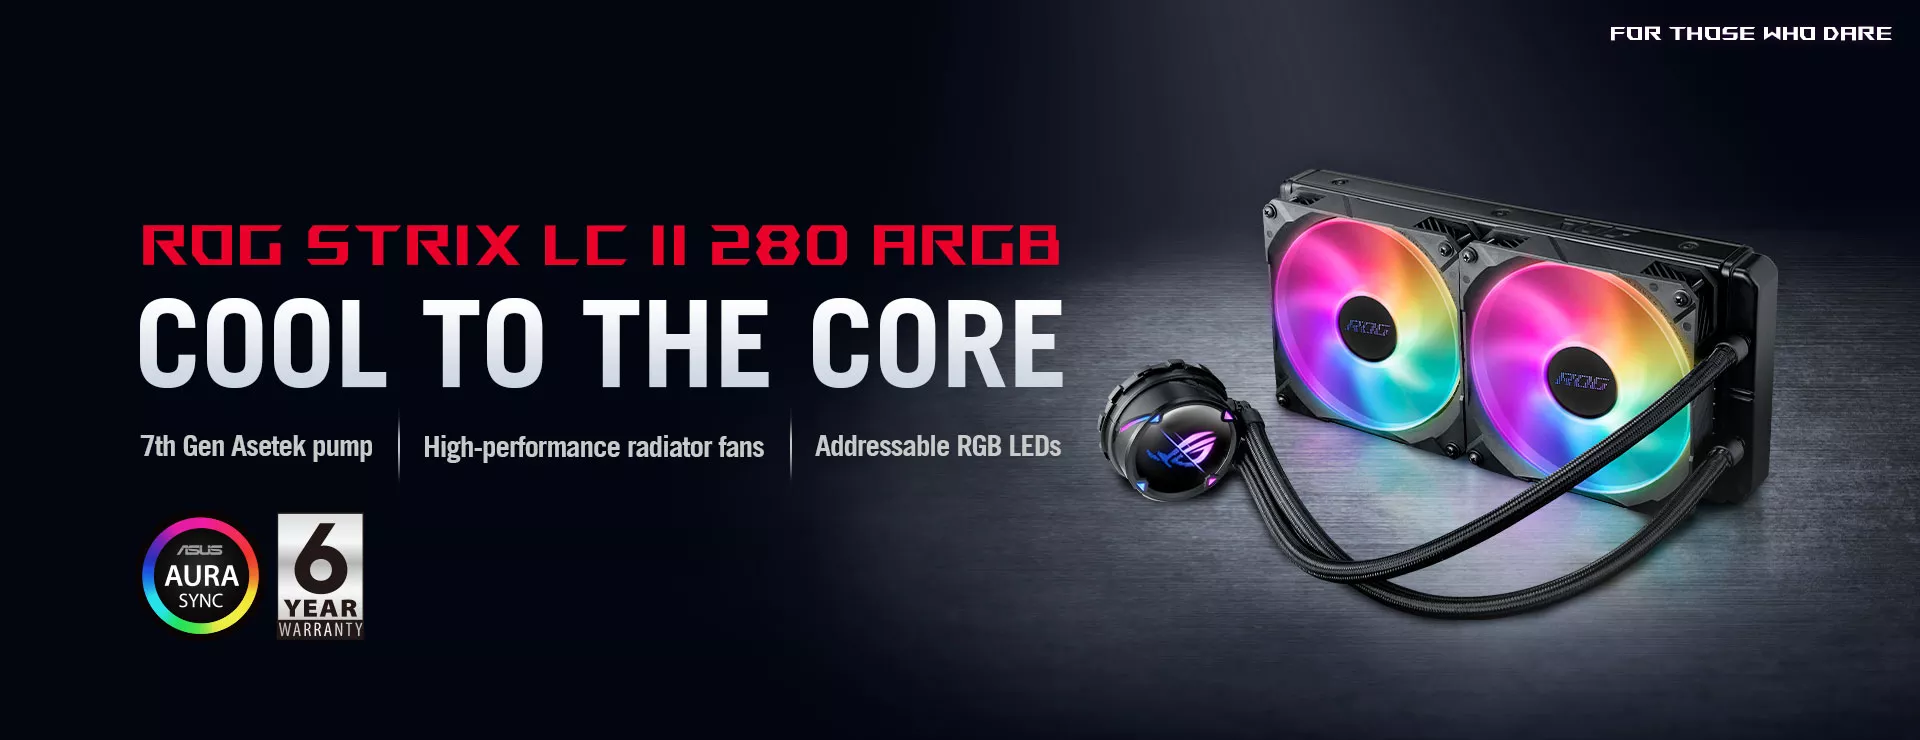 ROG Strix LC II 280 ARGB all-in-one liquid CPU cooler